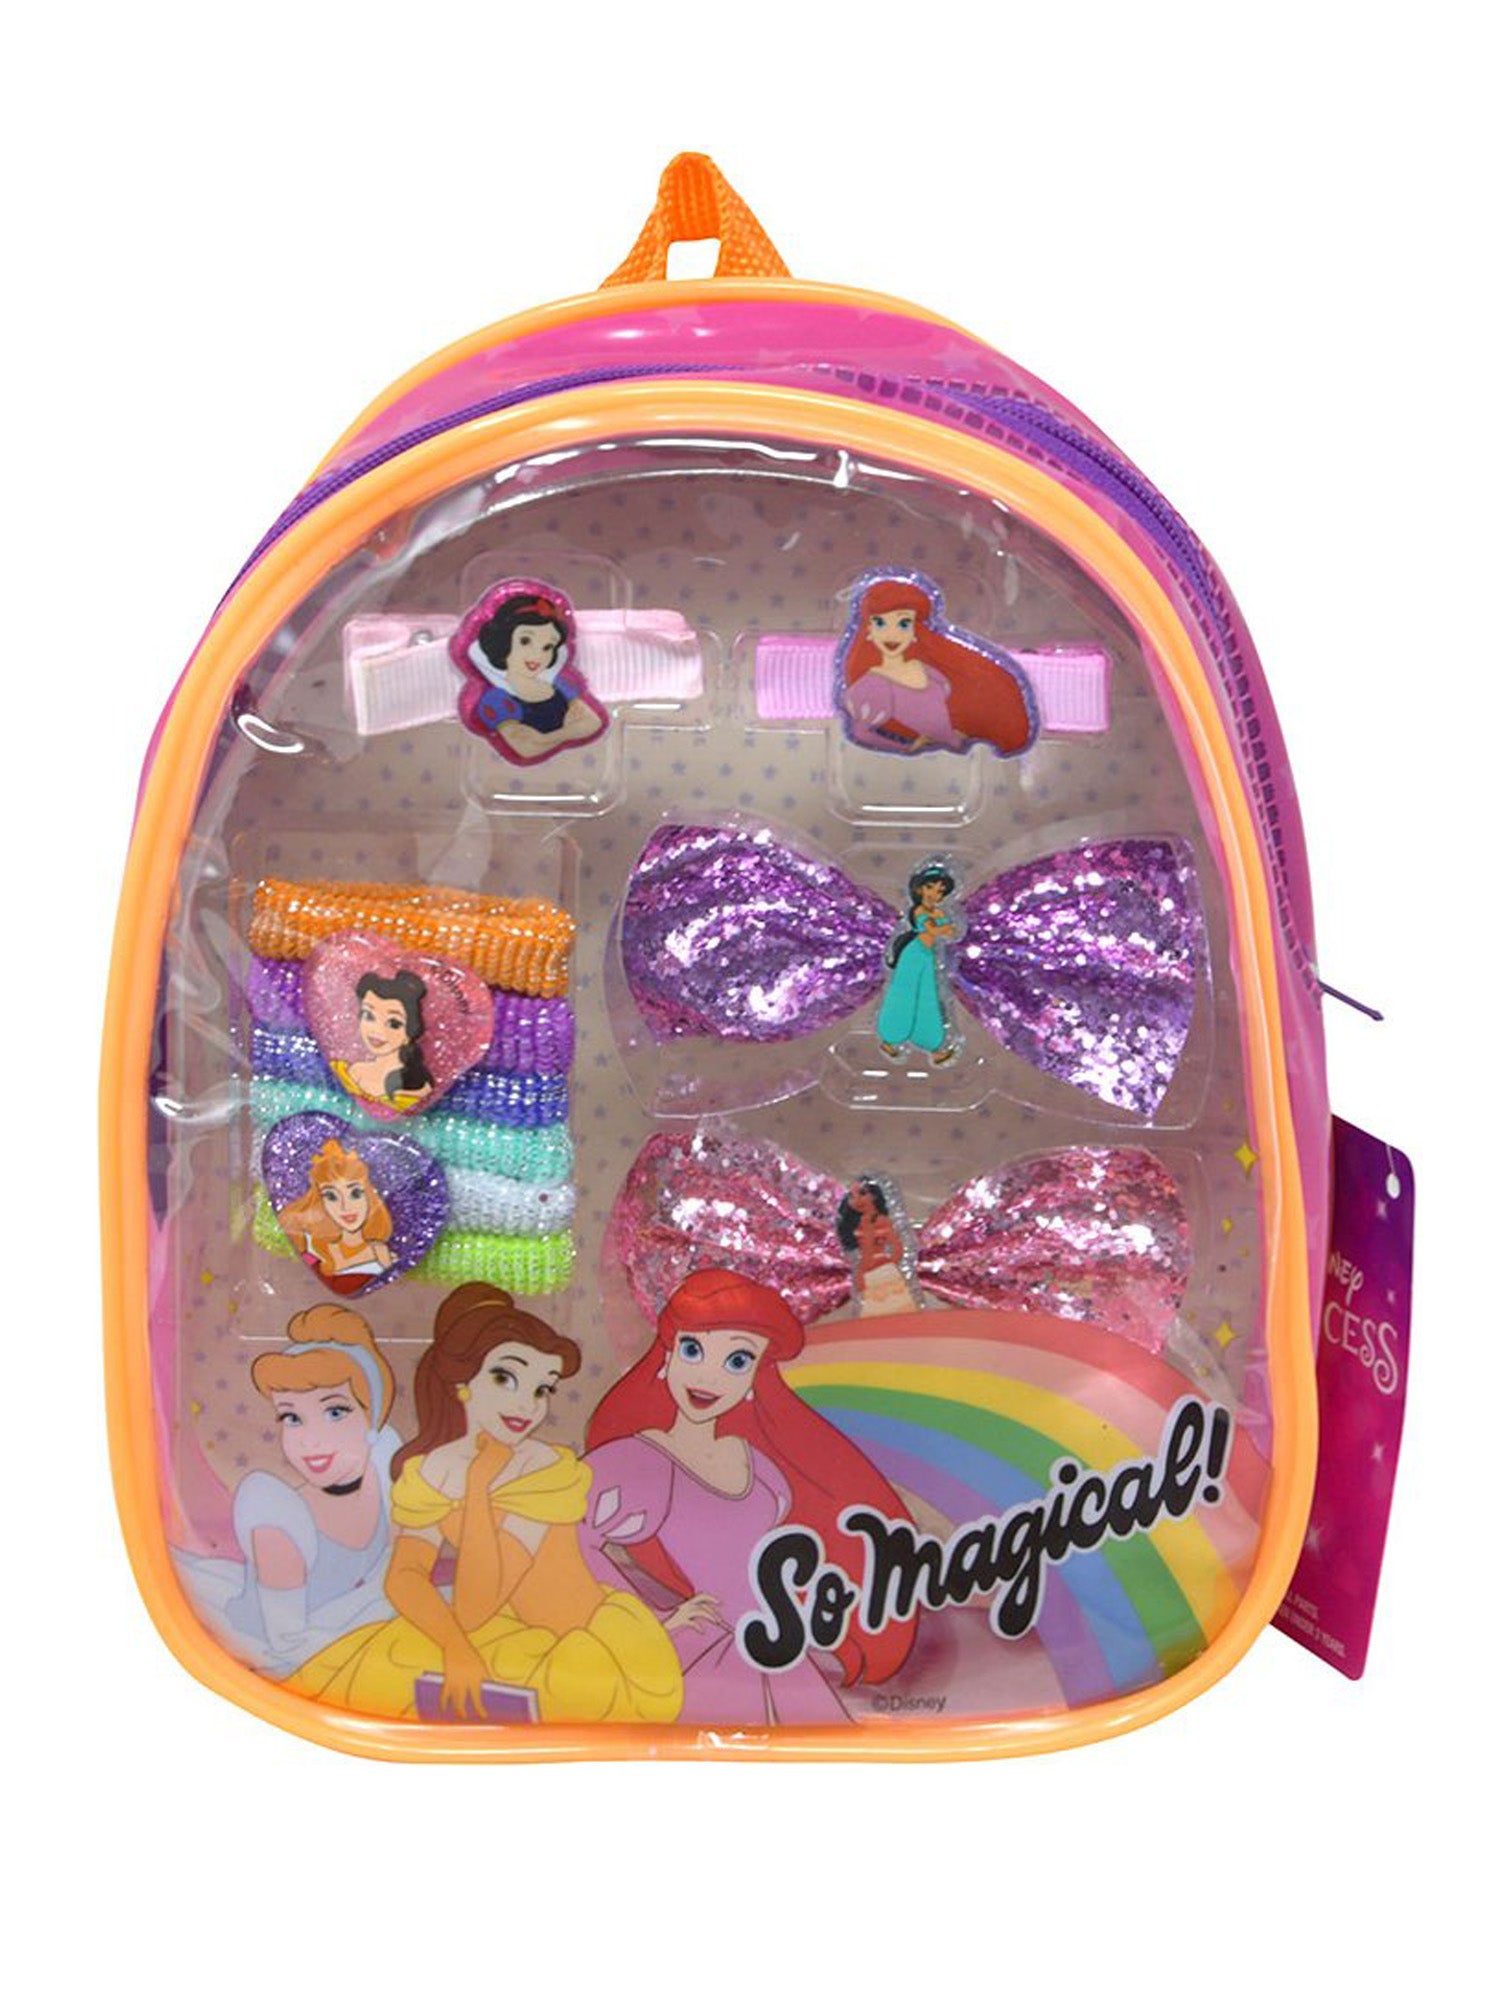 Disney Princesses Hair Accessory Backpack Girls Hair Clips Bows Ties (10-Pcs)